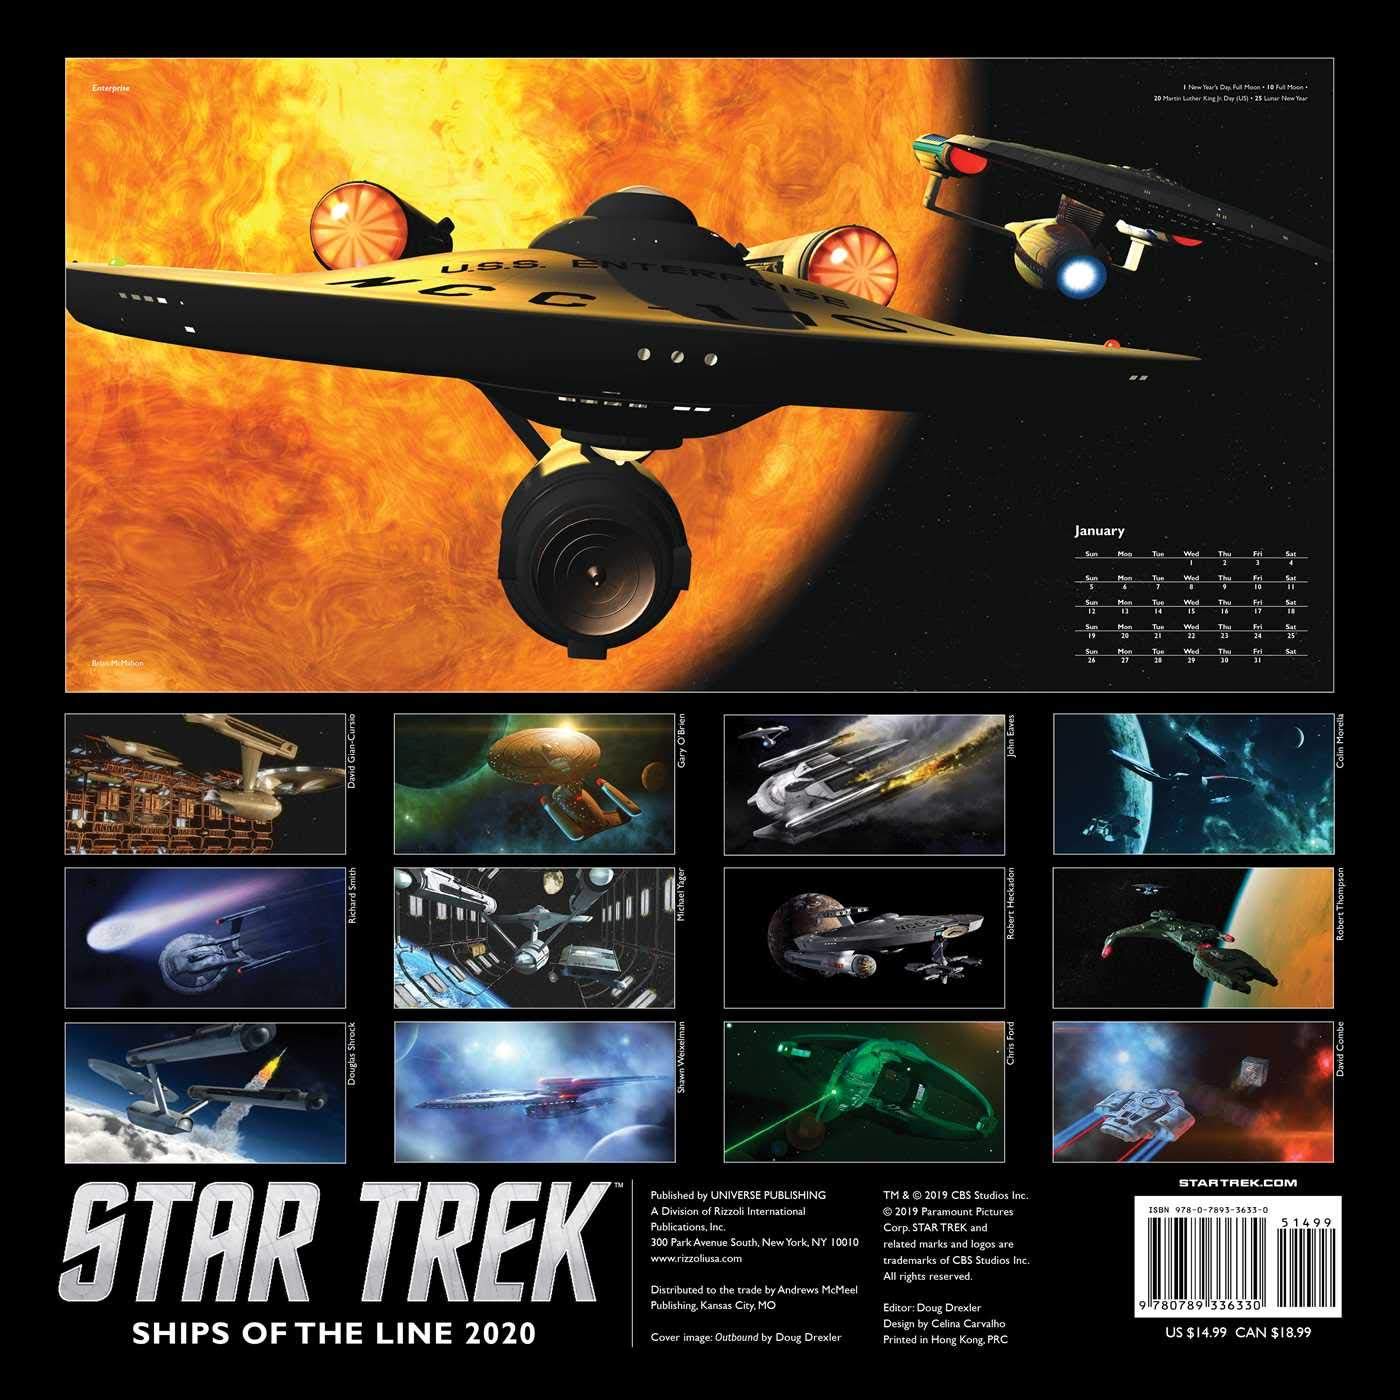 The Trek Collective 2020 Star Trek calendar lineup revealed